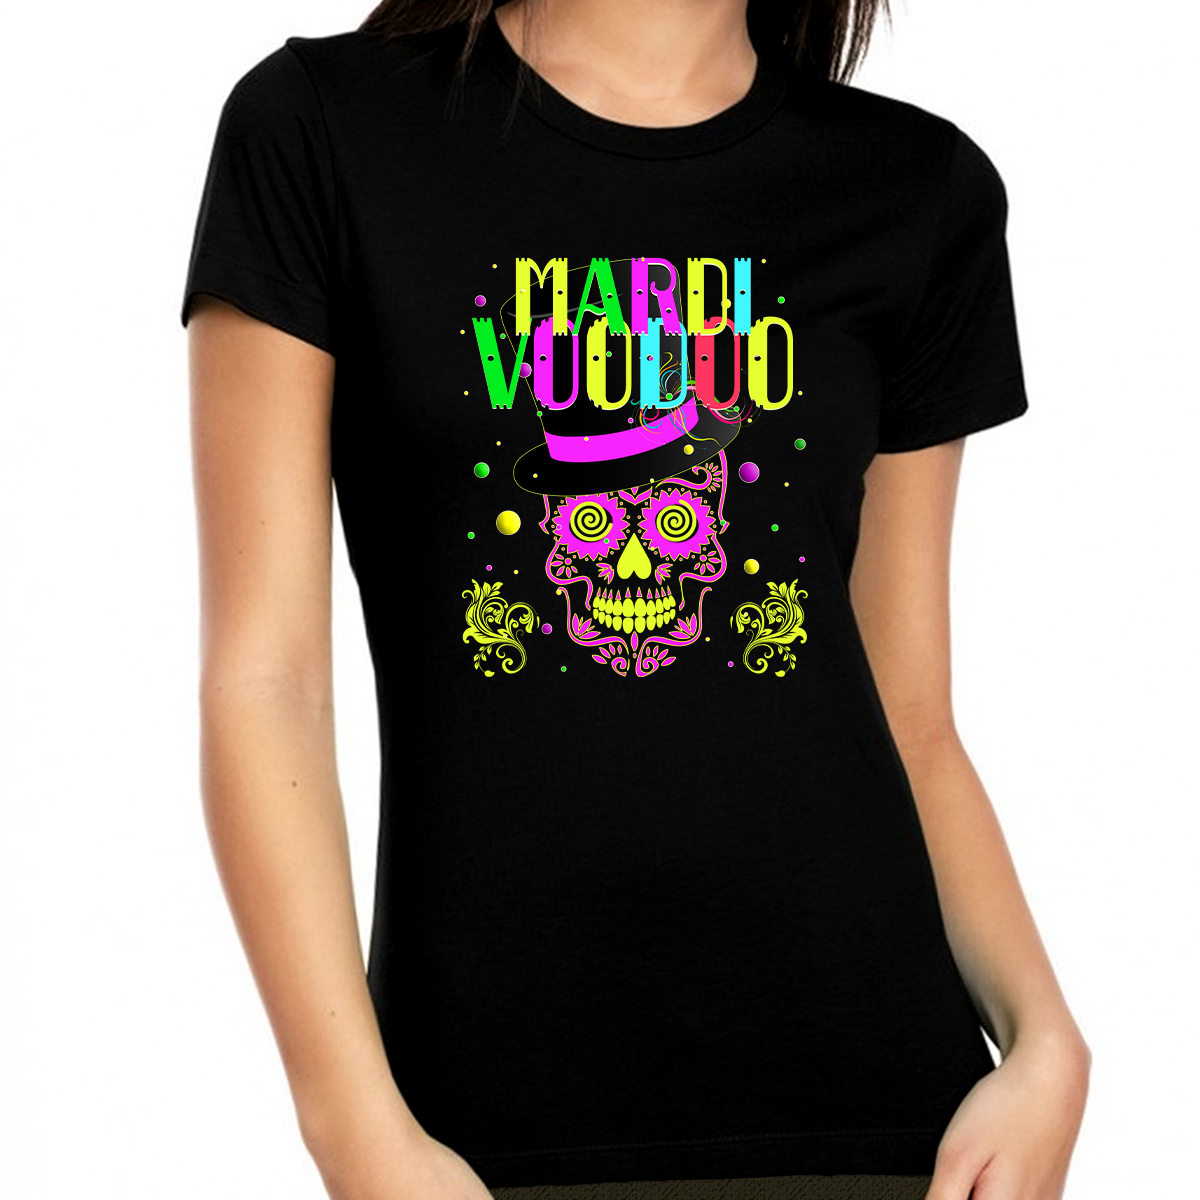 Mardi Gras Shirts for Women Mardi Gras Voodoo Shirt Funny Mardi Gras Voodoo Shirt Mardi Gras Outfit